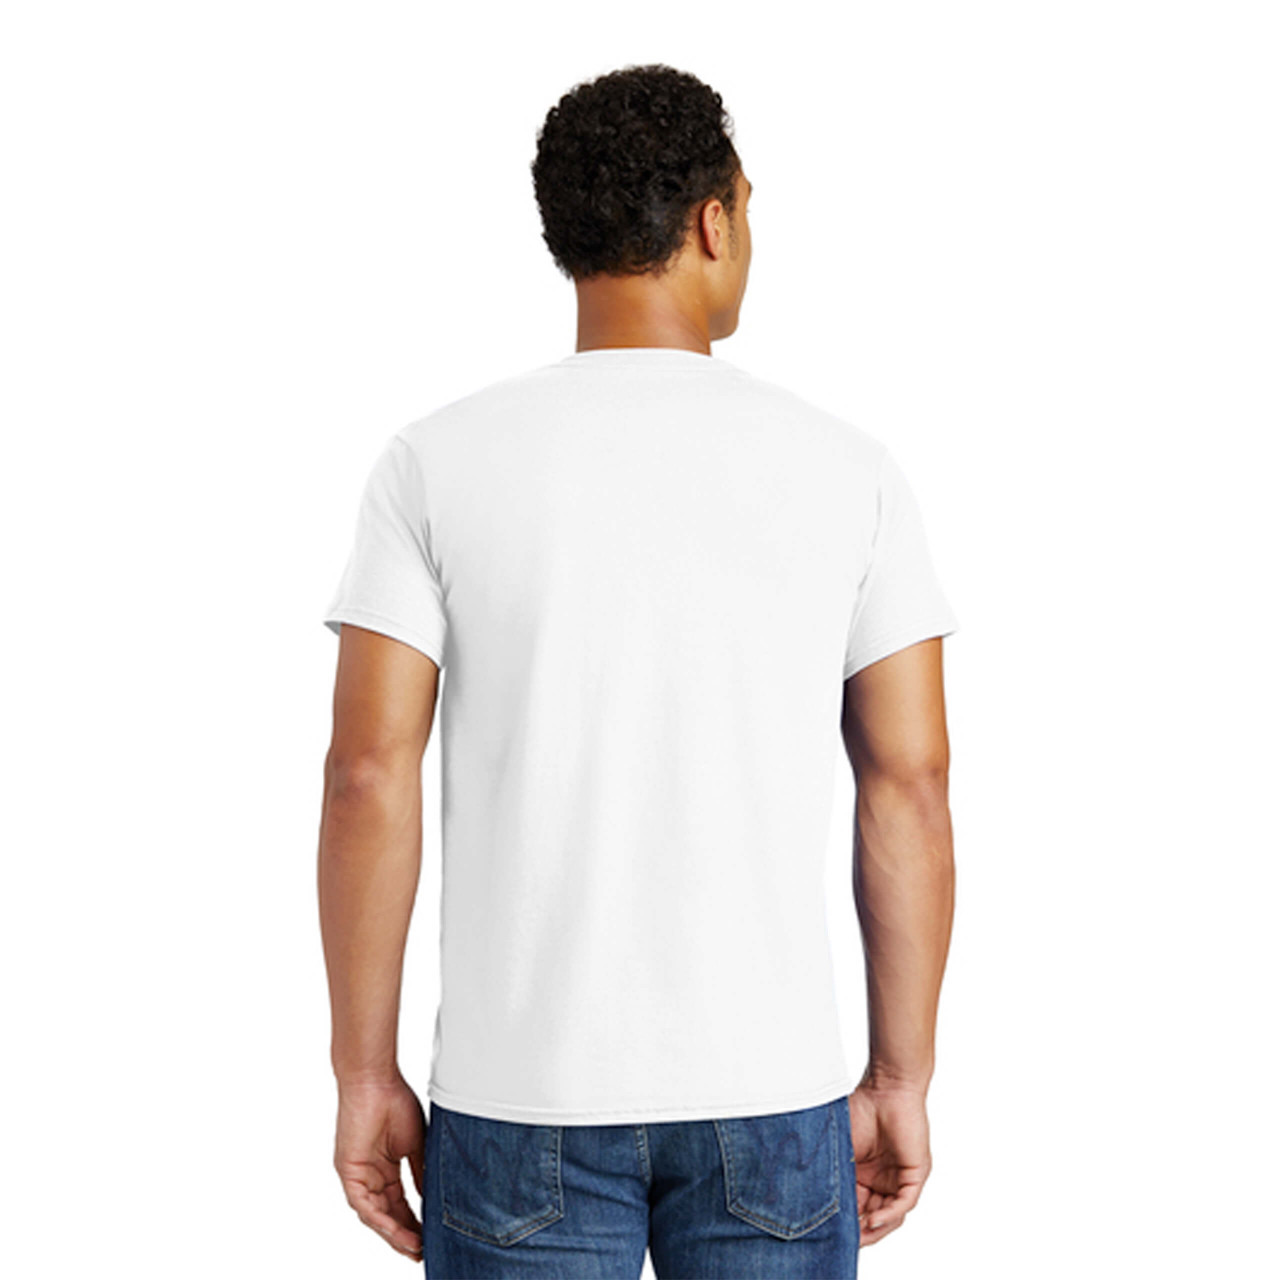 Hanes Perfect-T Tear-Away T-Shirt 100% Cotton Black or White, S, M, L, XL